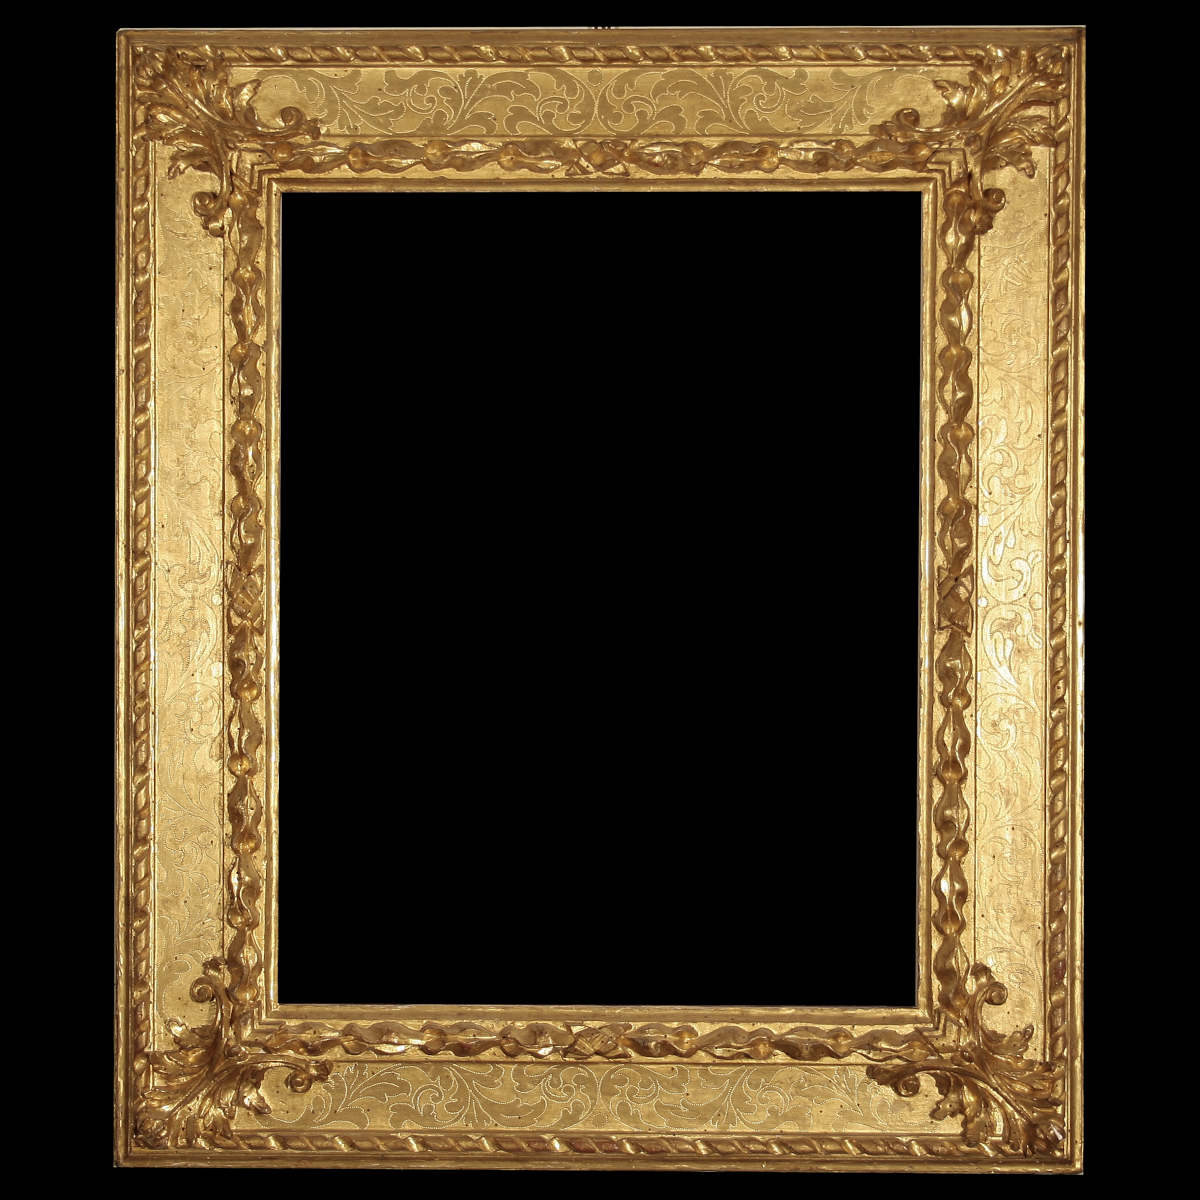 Rome Round framed mirror - Antique Gold Leaf